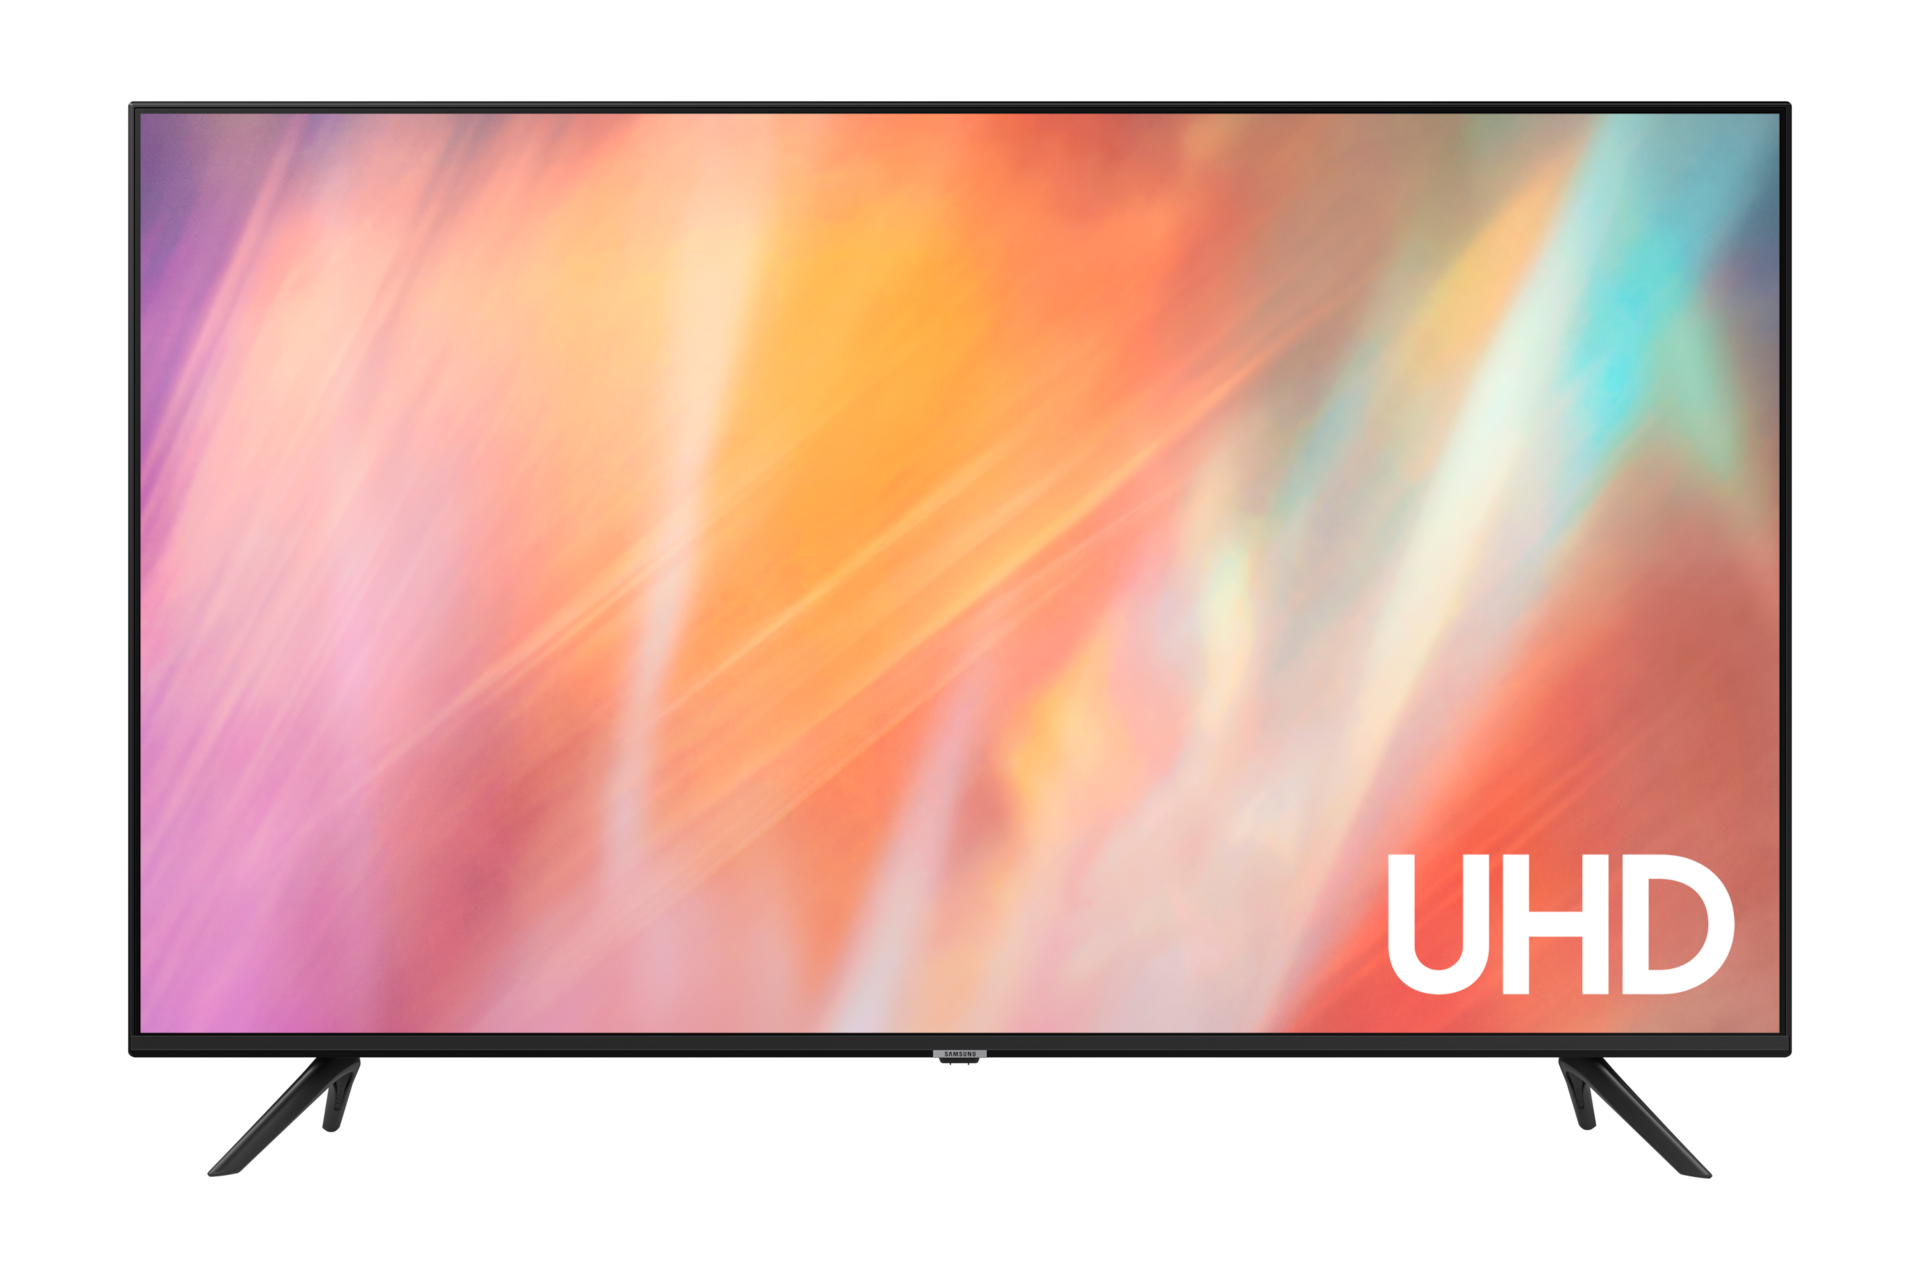 Samsung Smart TV 65'', UHD 4K, AU7090